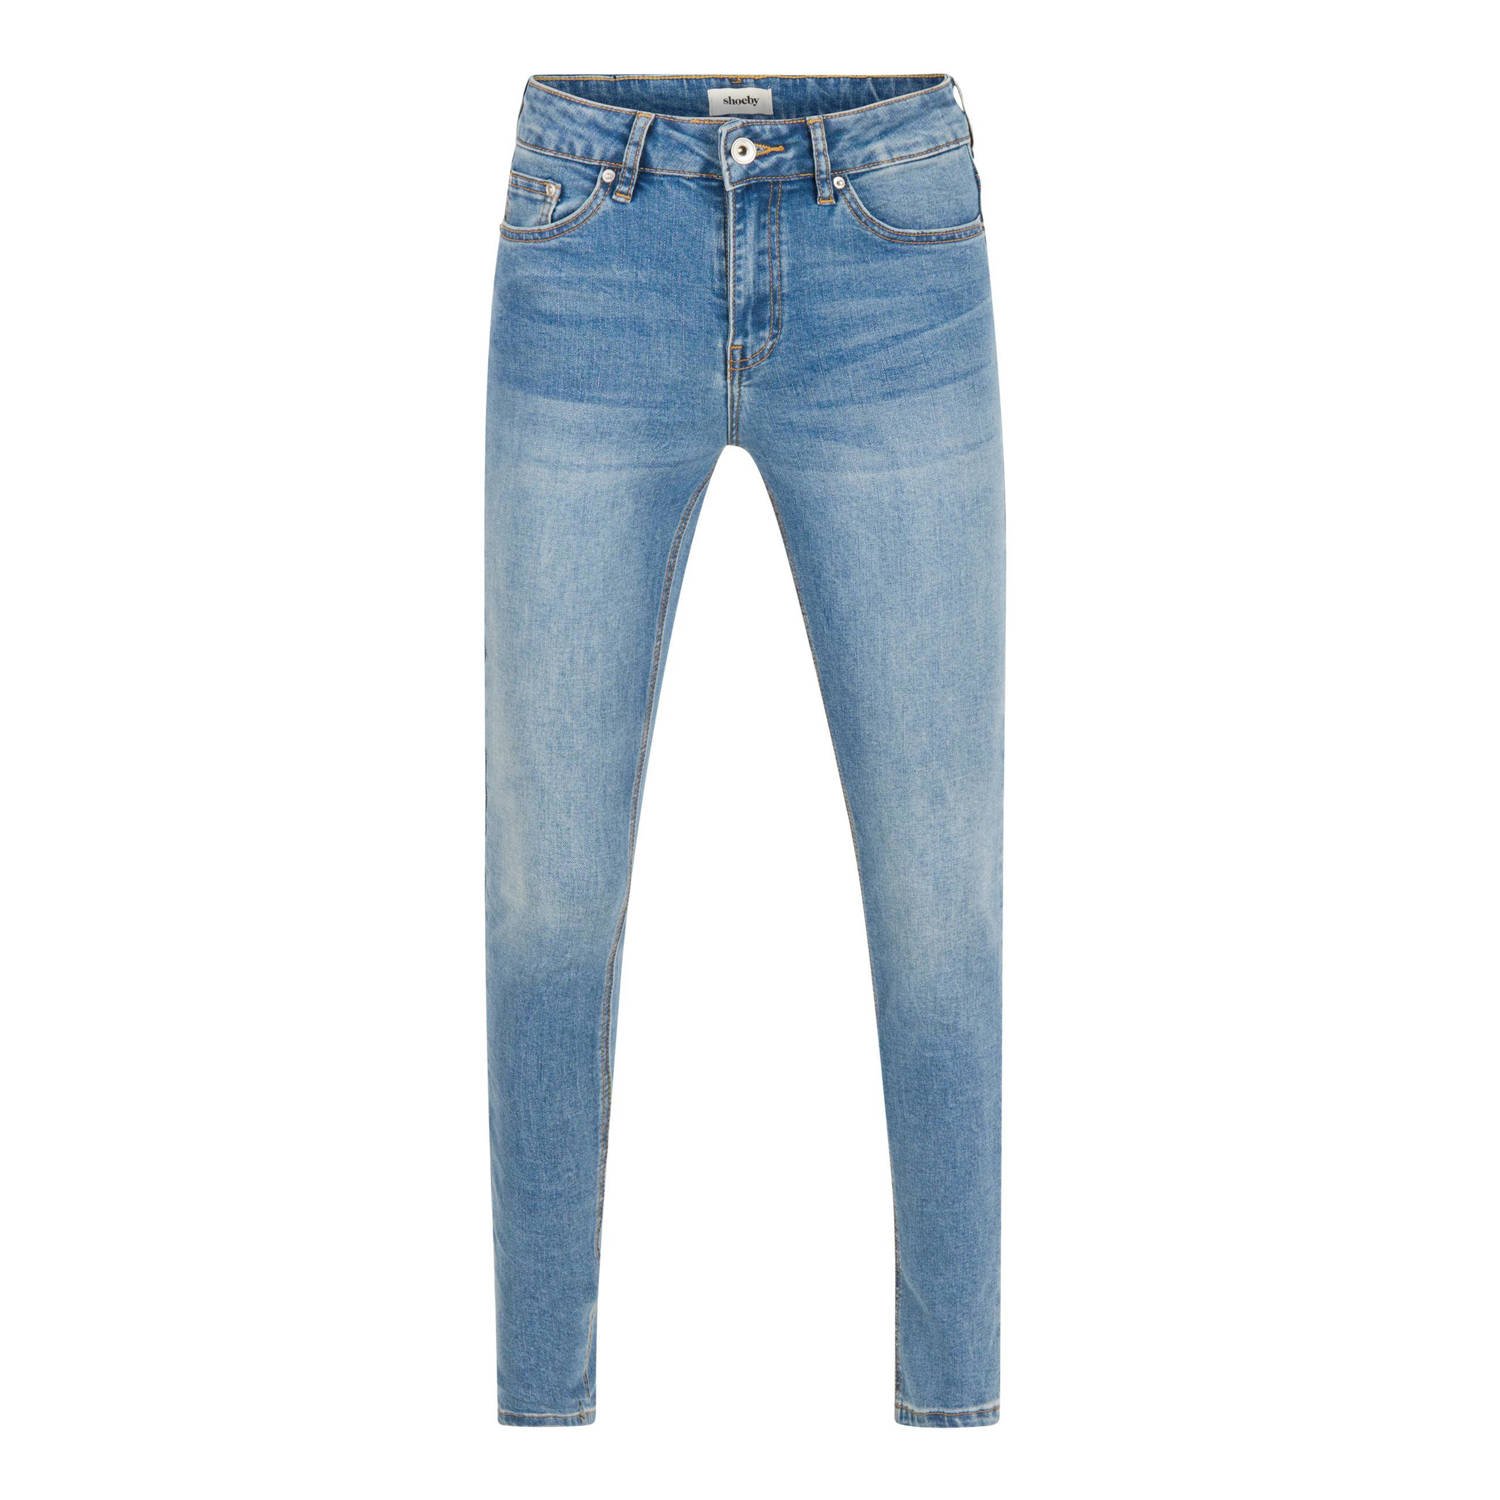 Shoeby skinny jeans medium blue denim